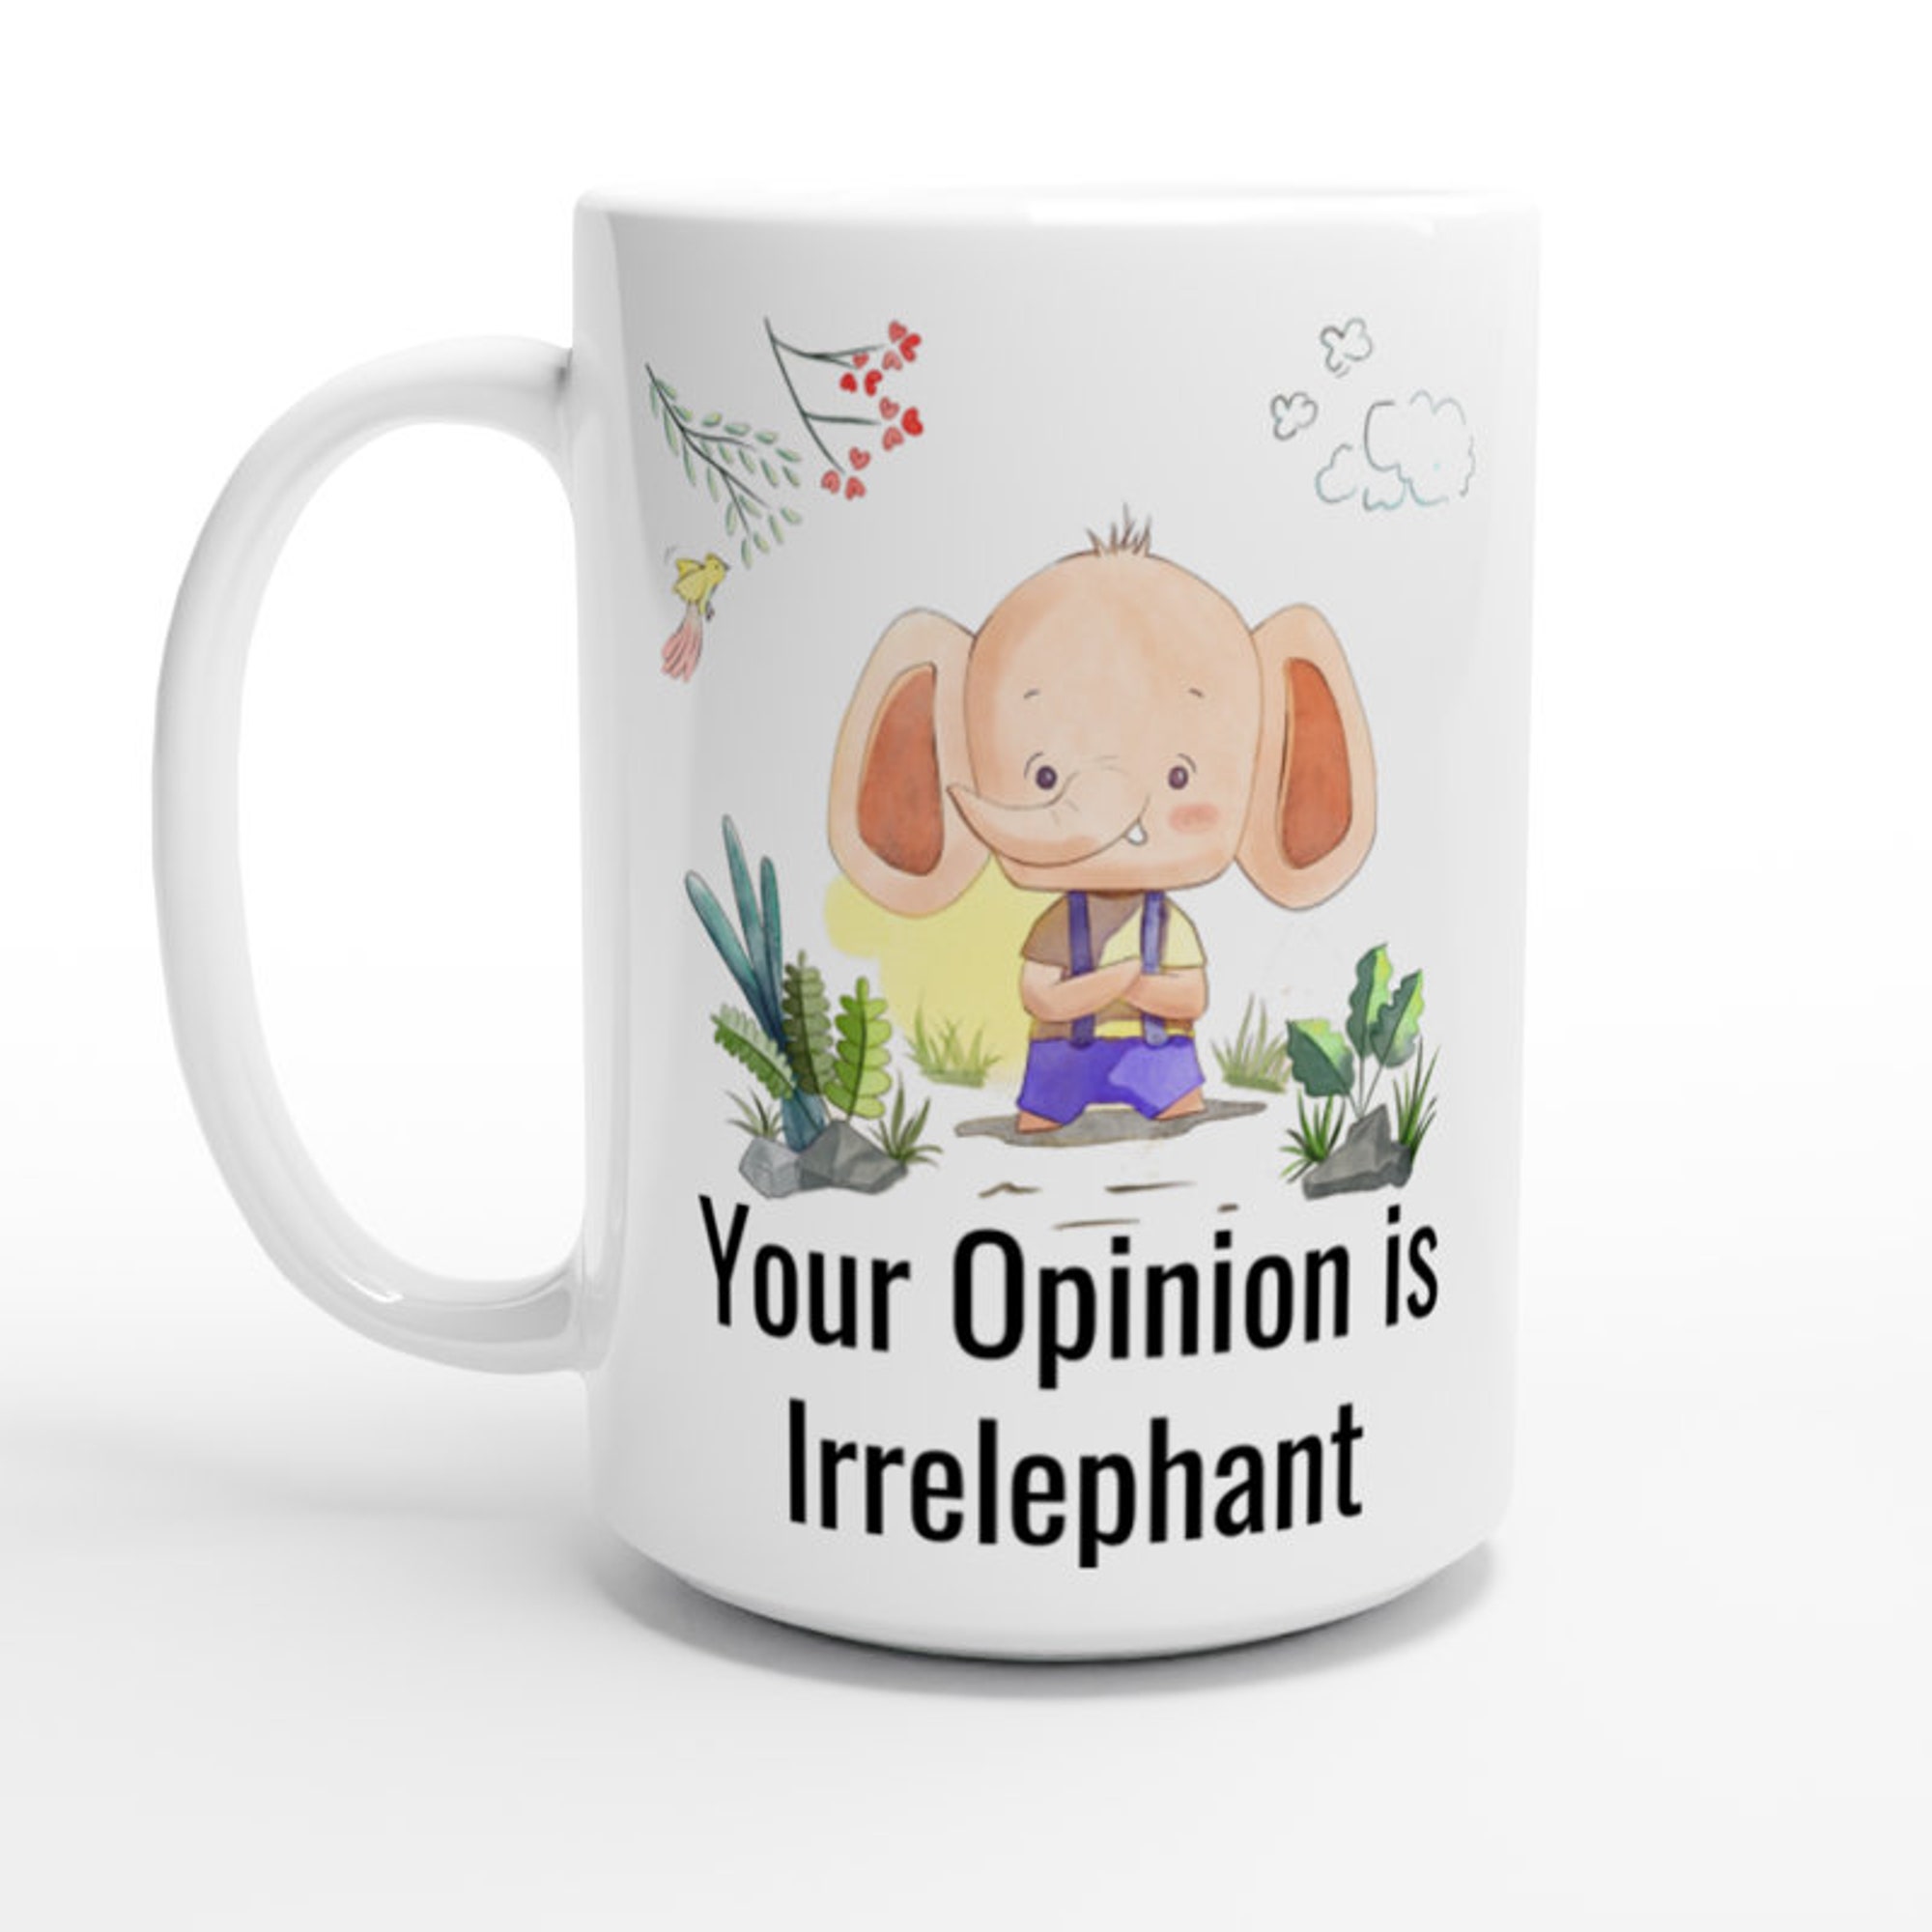 Discover Cute Mug! Elephant Gifts! Your Opinion is Irrelephant Mug!